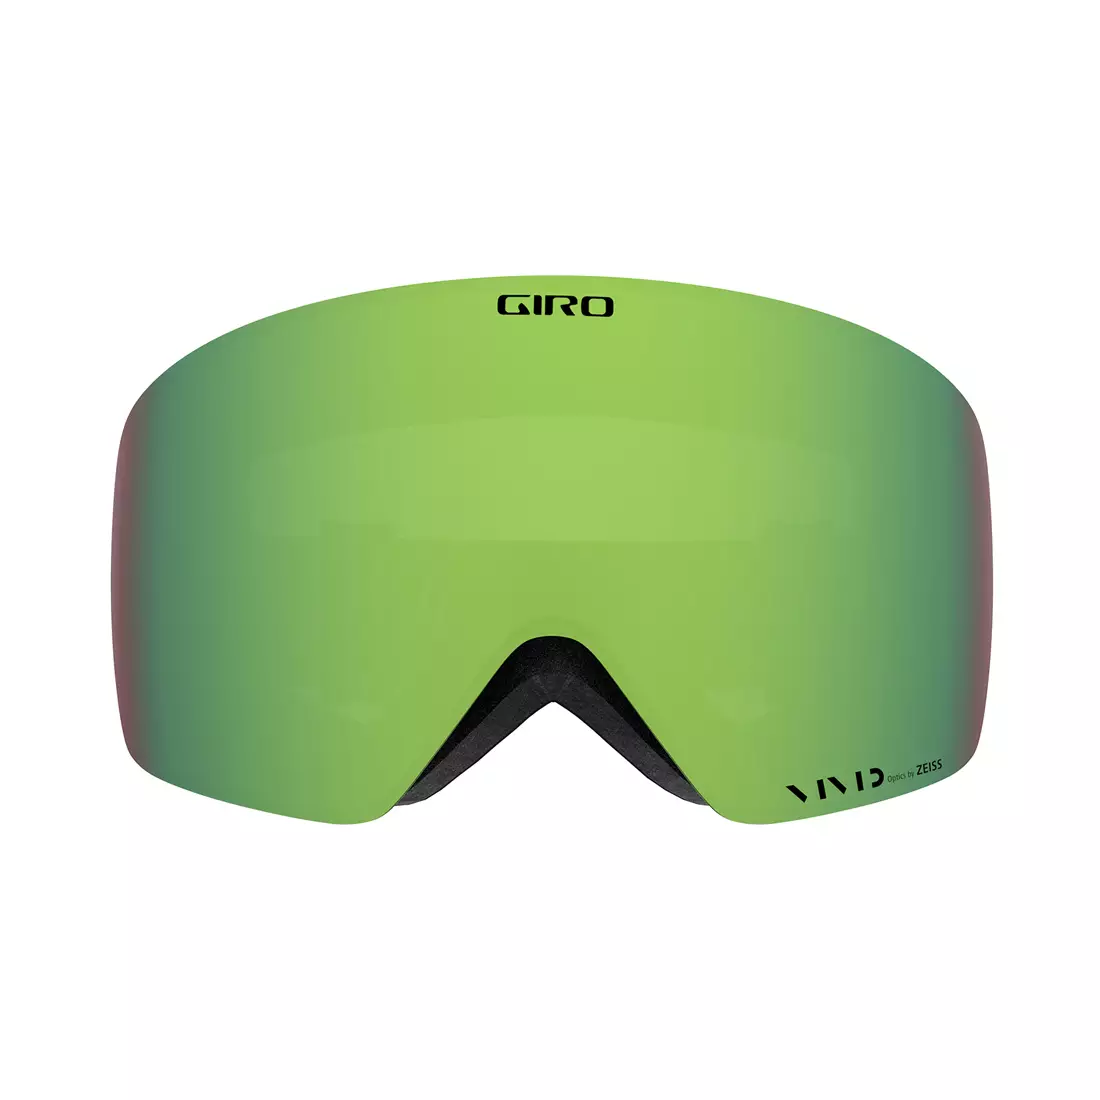 GIRO gogle zimowe narciarskie/snowboardowe CONTOUR GREEN COSMIC SLIME (VIVID-Carl Zeiss EMERALD 22% S2 + VIVID-Carl Zeiss INFRARED 62% S1) GR-7119486